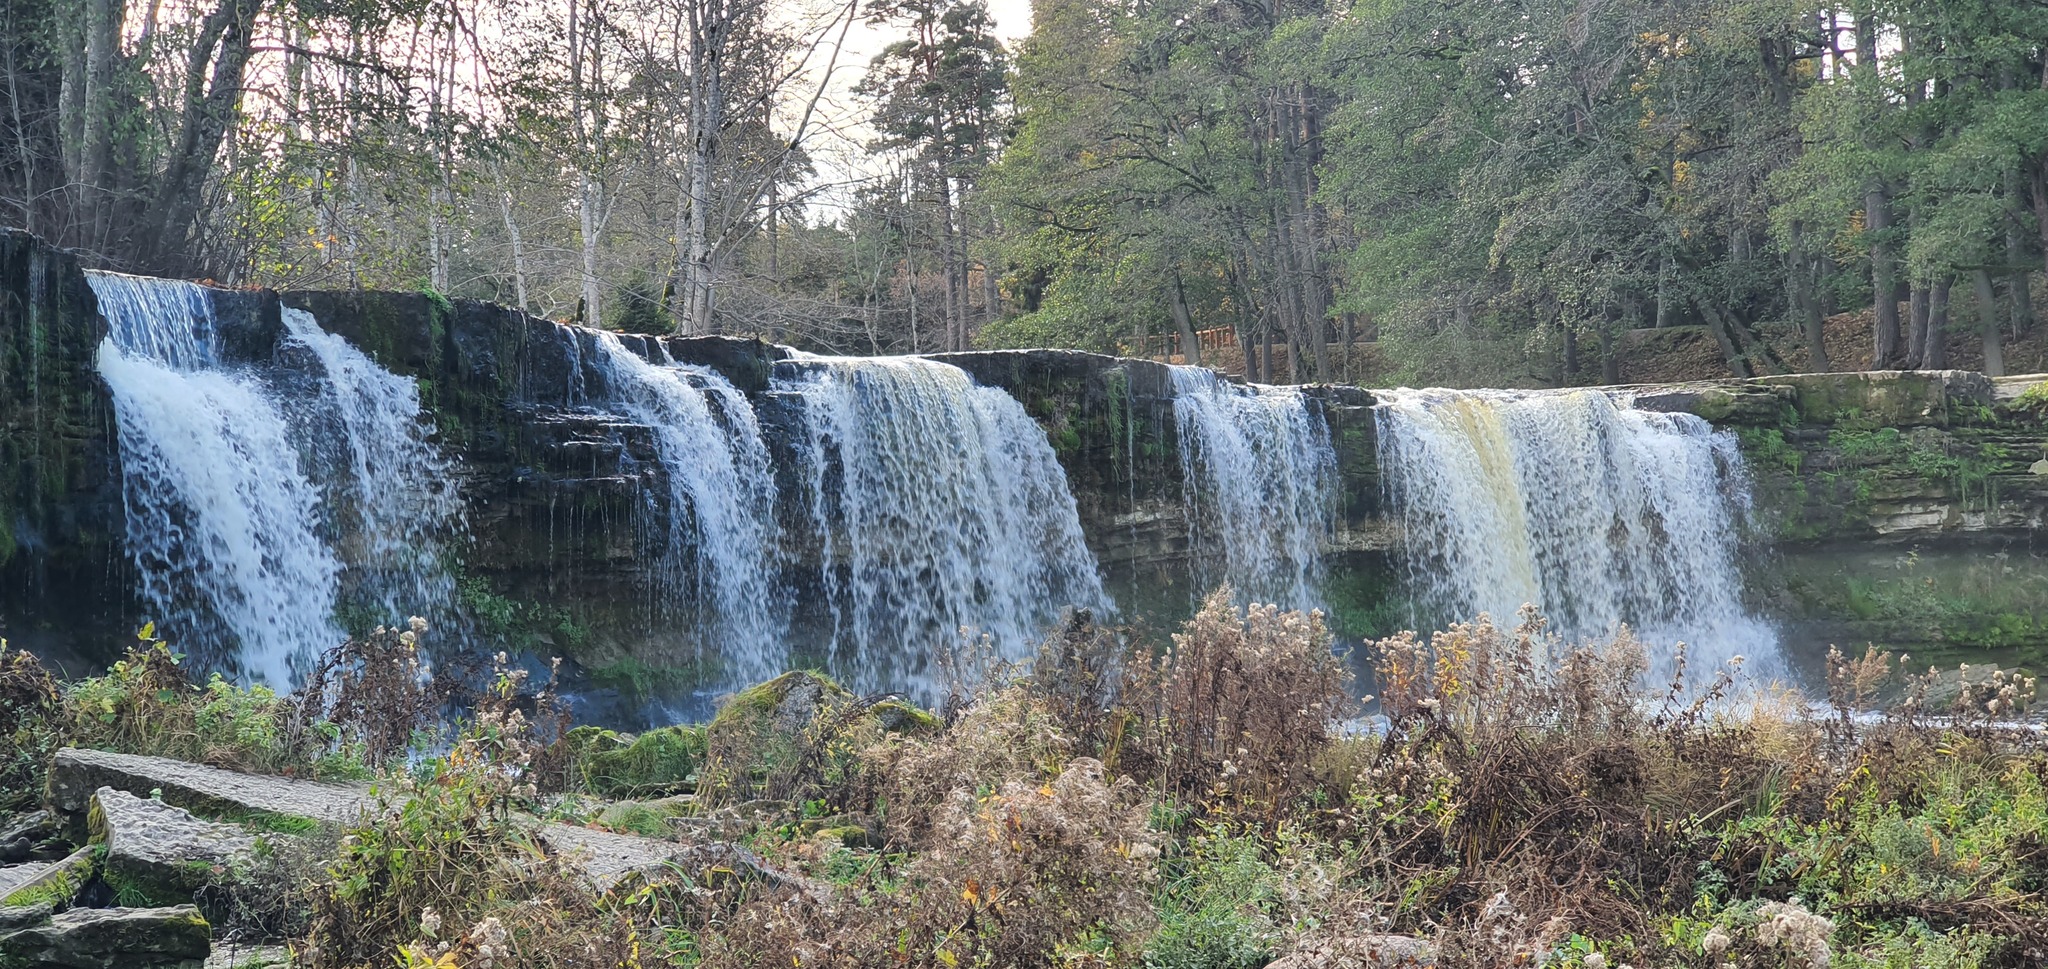 Hamlet Hill and Keila Joa Waterfall - My, Estonia, Waterfall, Sea, The rocks, Longpost, Nature, Autumn, The photo, Mobile photography